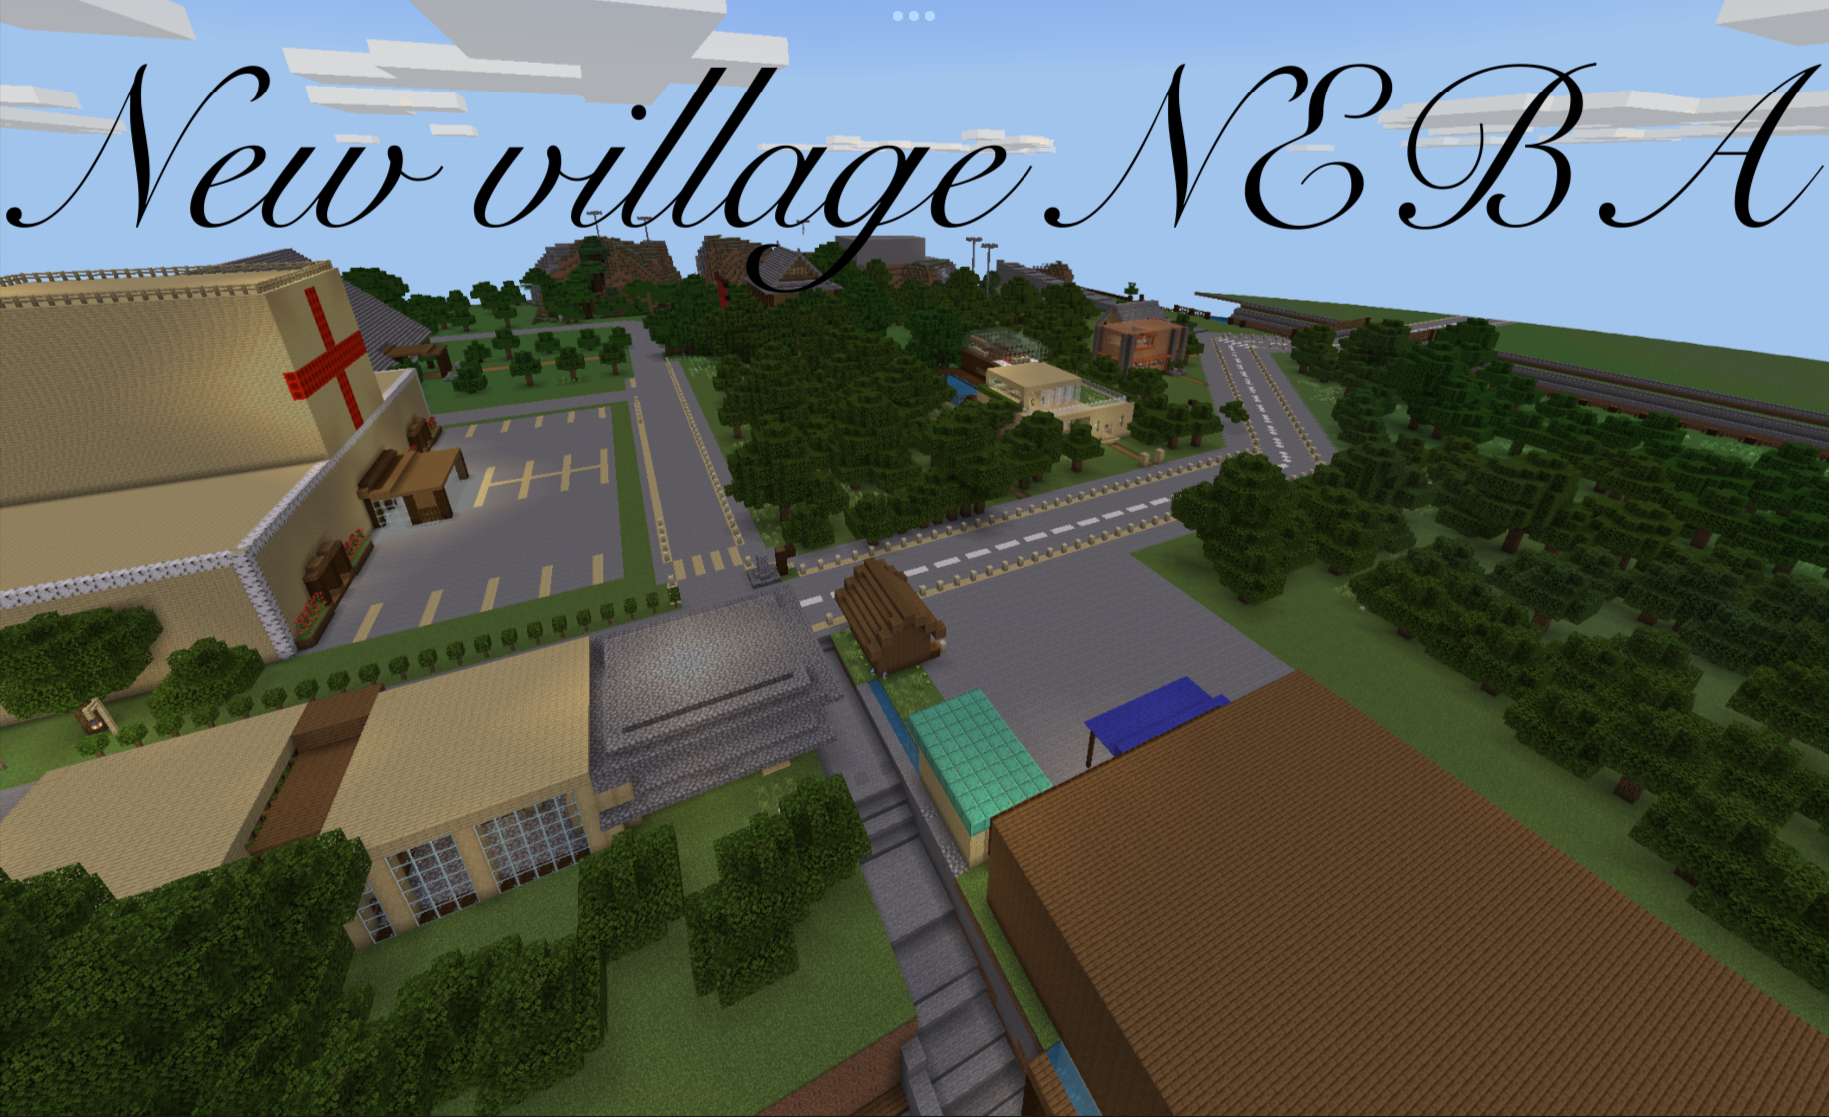 New village NEBA